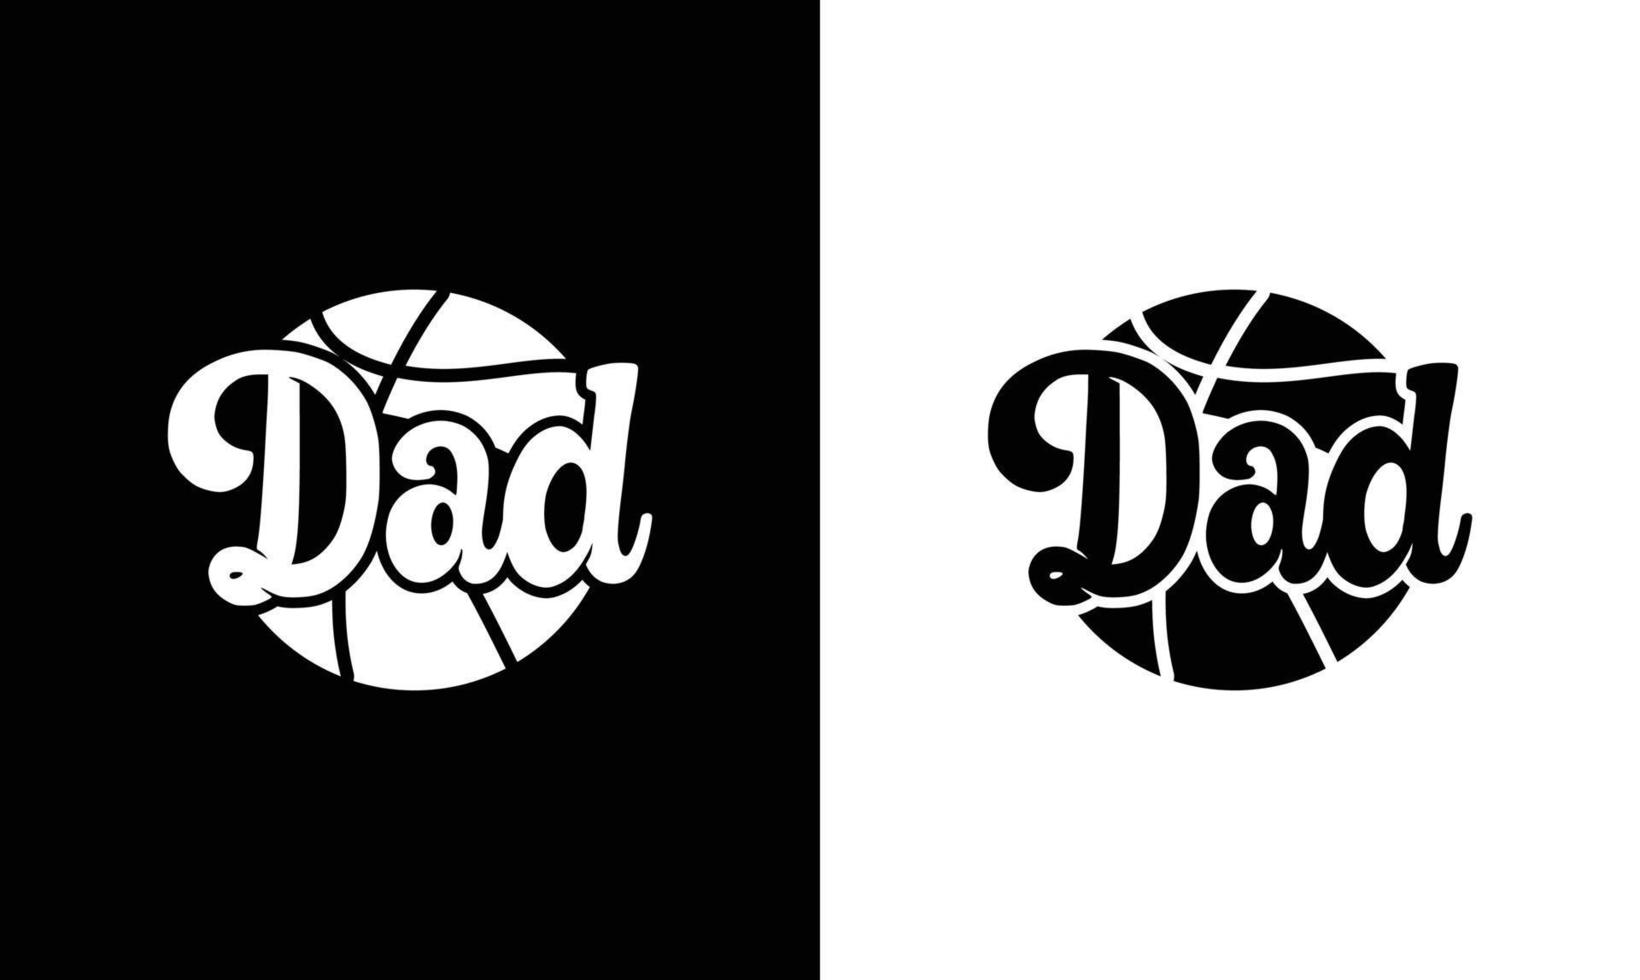 Basketball-Zitat-T-Shirt-Design, Typografie vektor